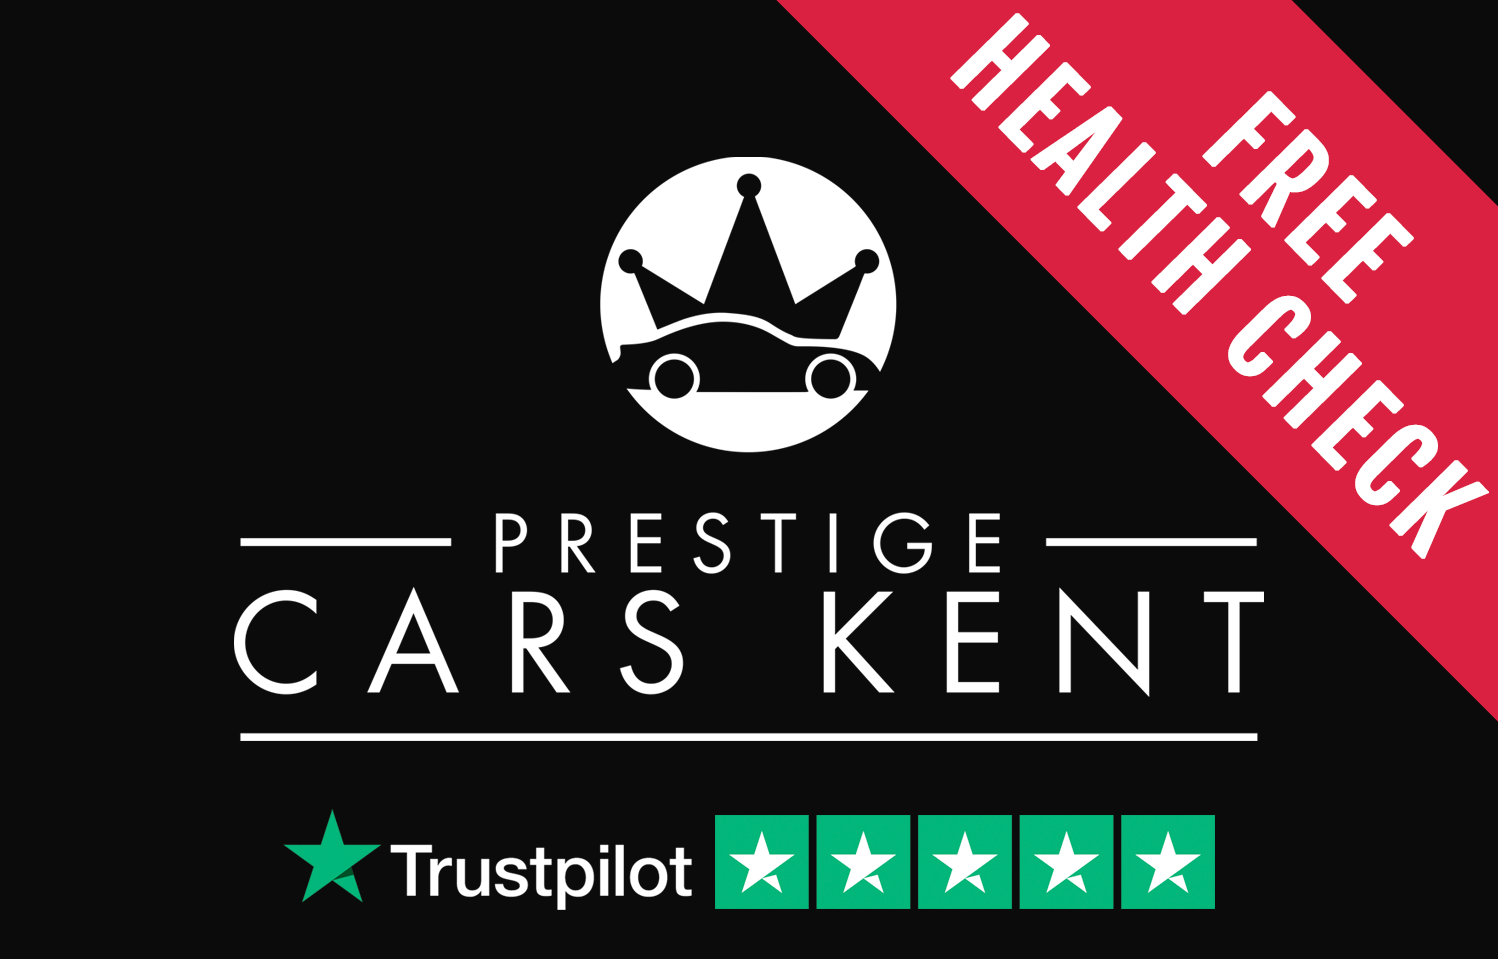 Prestige Cars Kent Logo